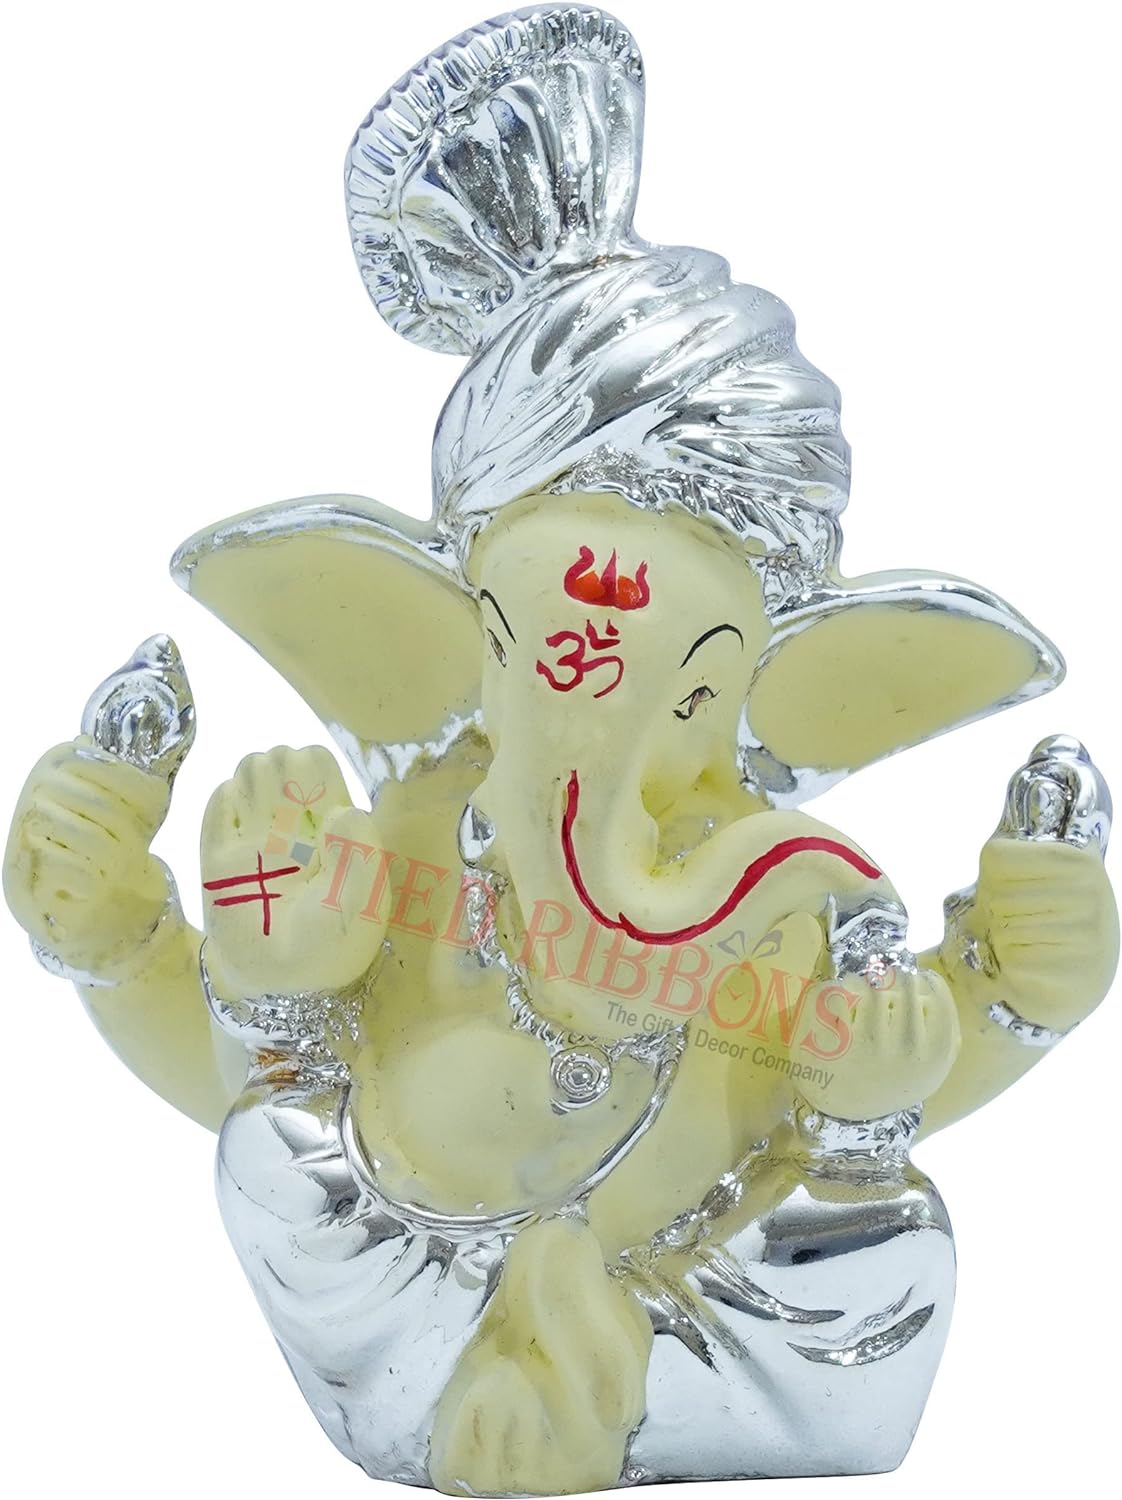 TIED RIBBONS Ganesha Idol for Car Dashboard | Ganesh Chaturthi Gifts | Ganesh Idol Figurine Ganpati Idol Car- Ganesha Statues Hindu Decor Ganesh Statue for Home Decorations, Pooja, Mandir